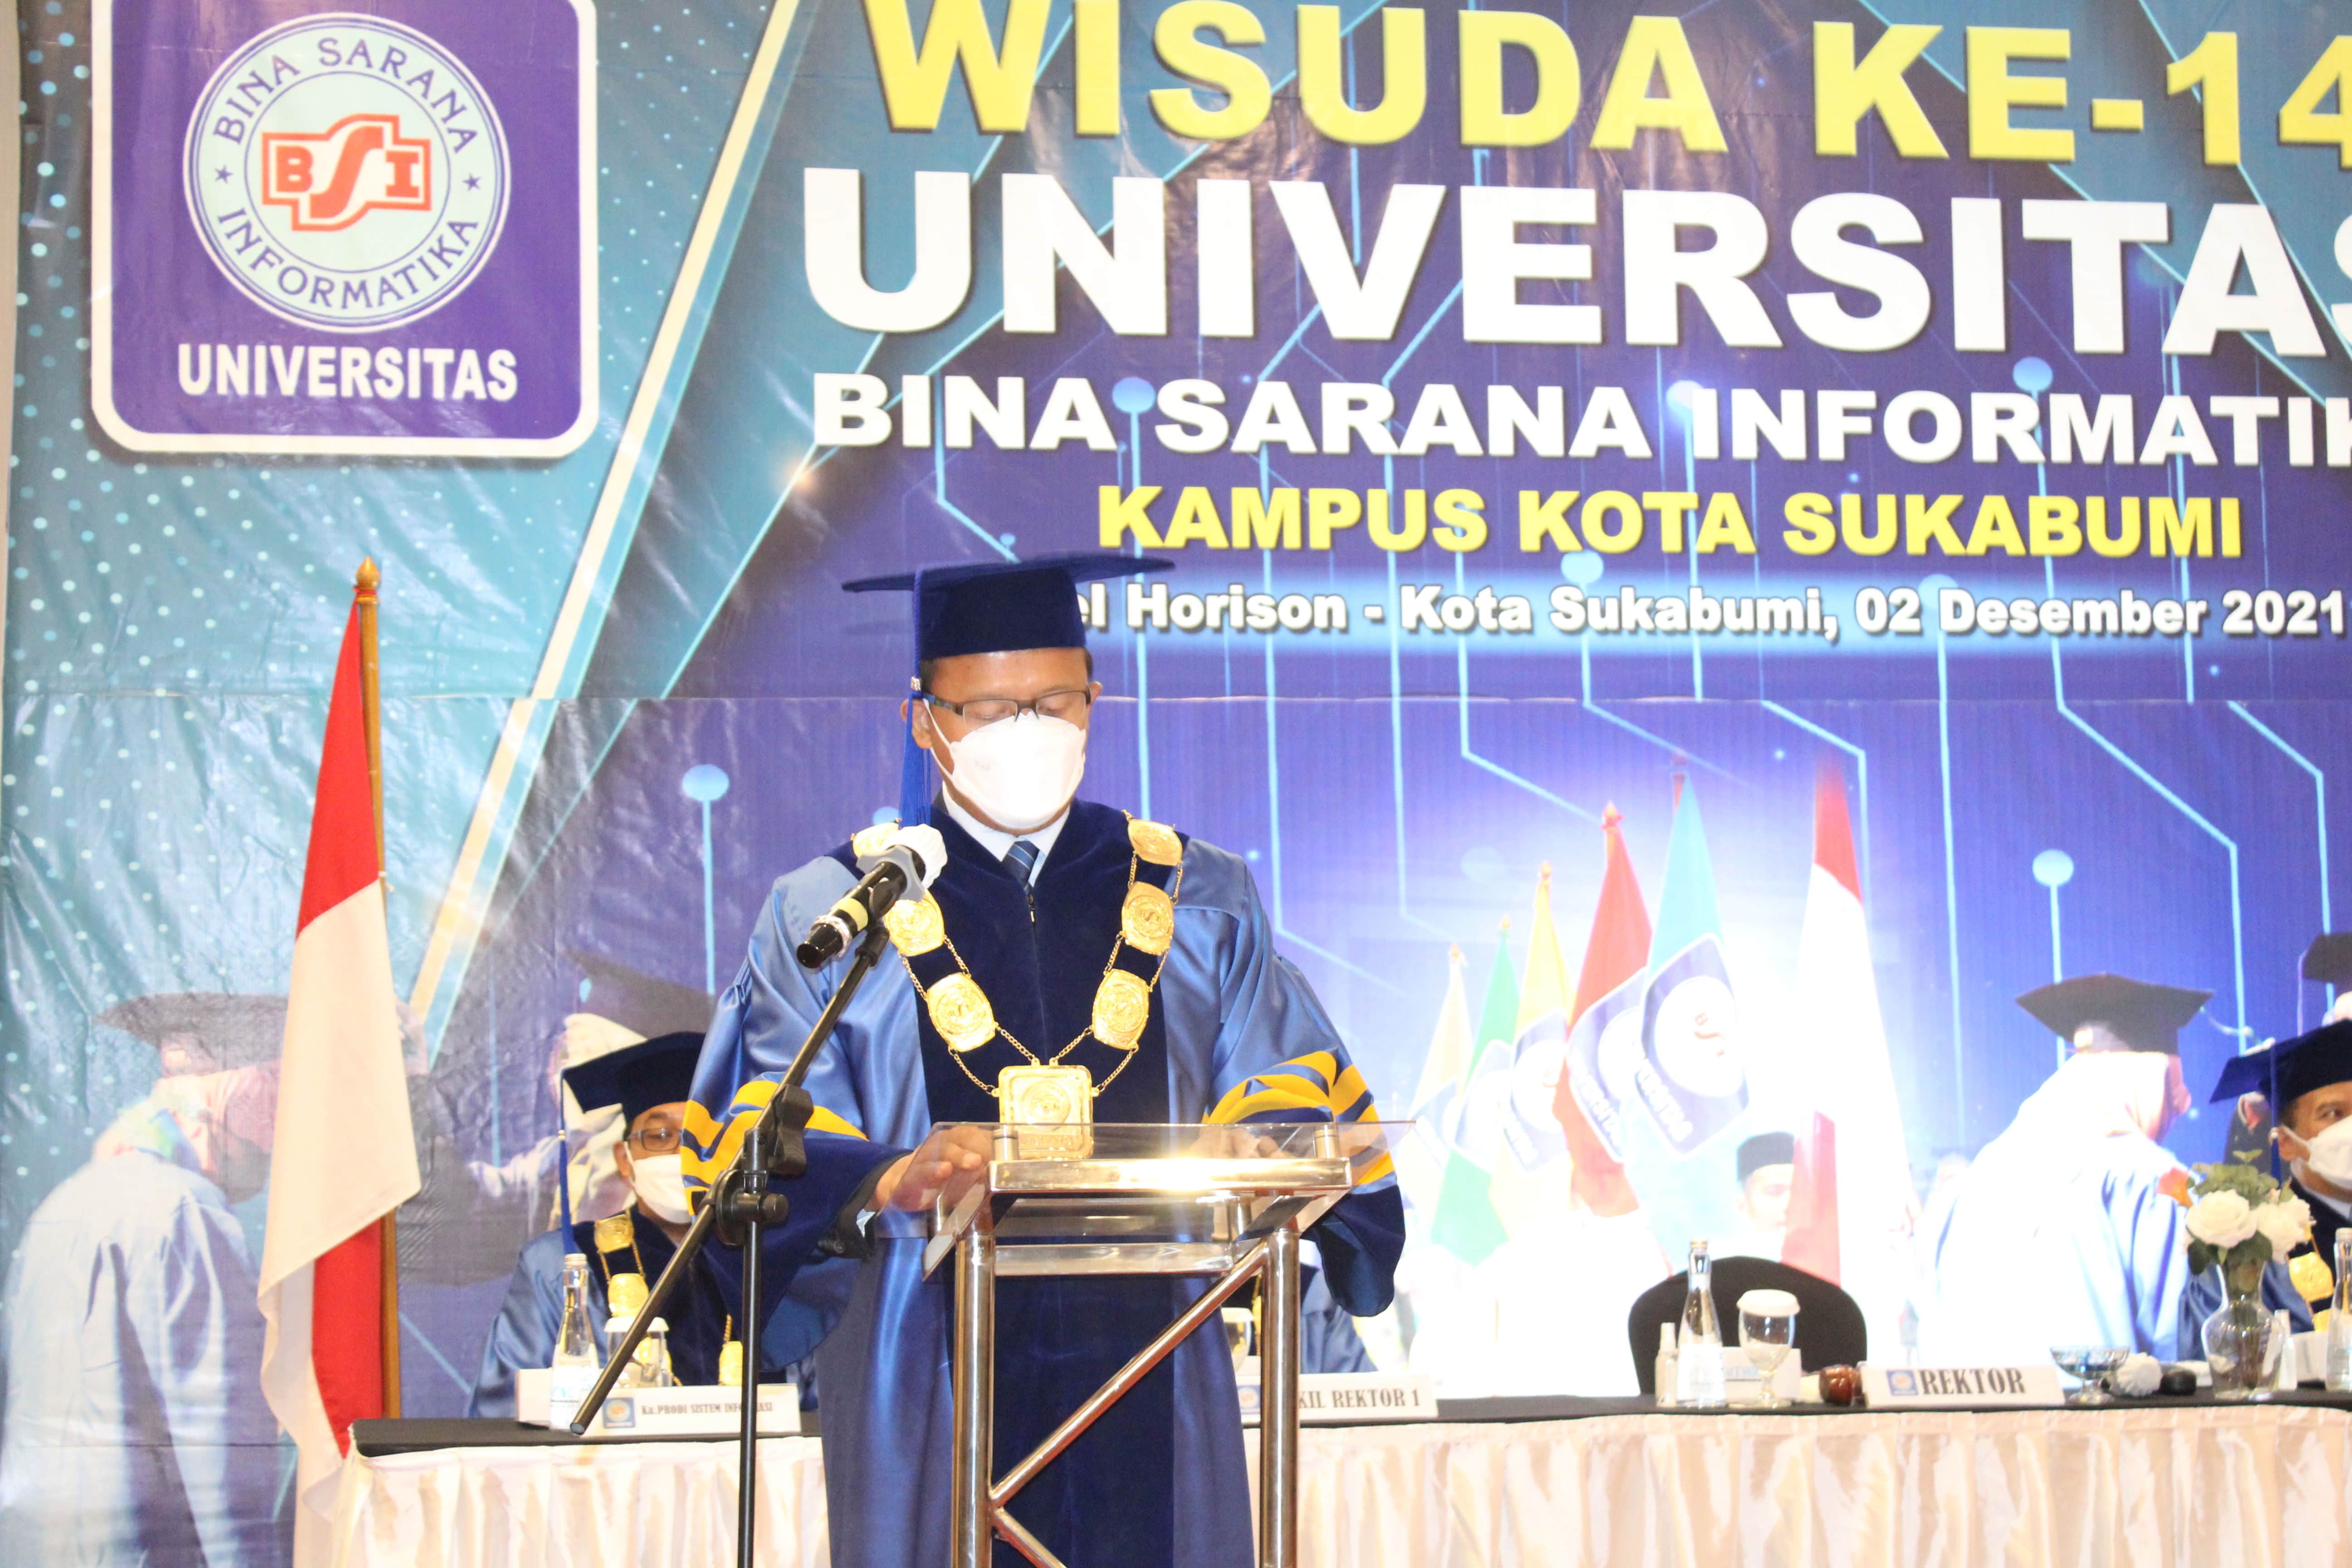 Wisuda Universitas BSI Kampus Kota Sukabumi Ke-14